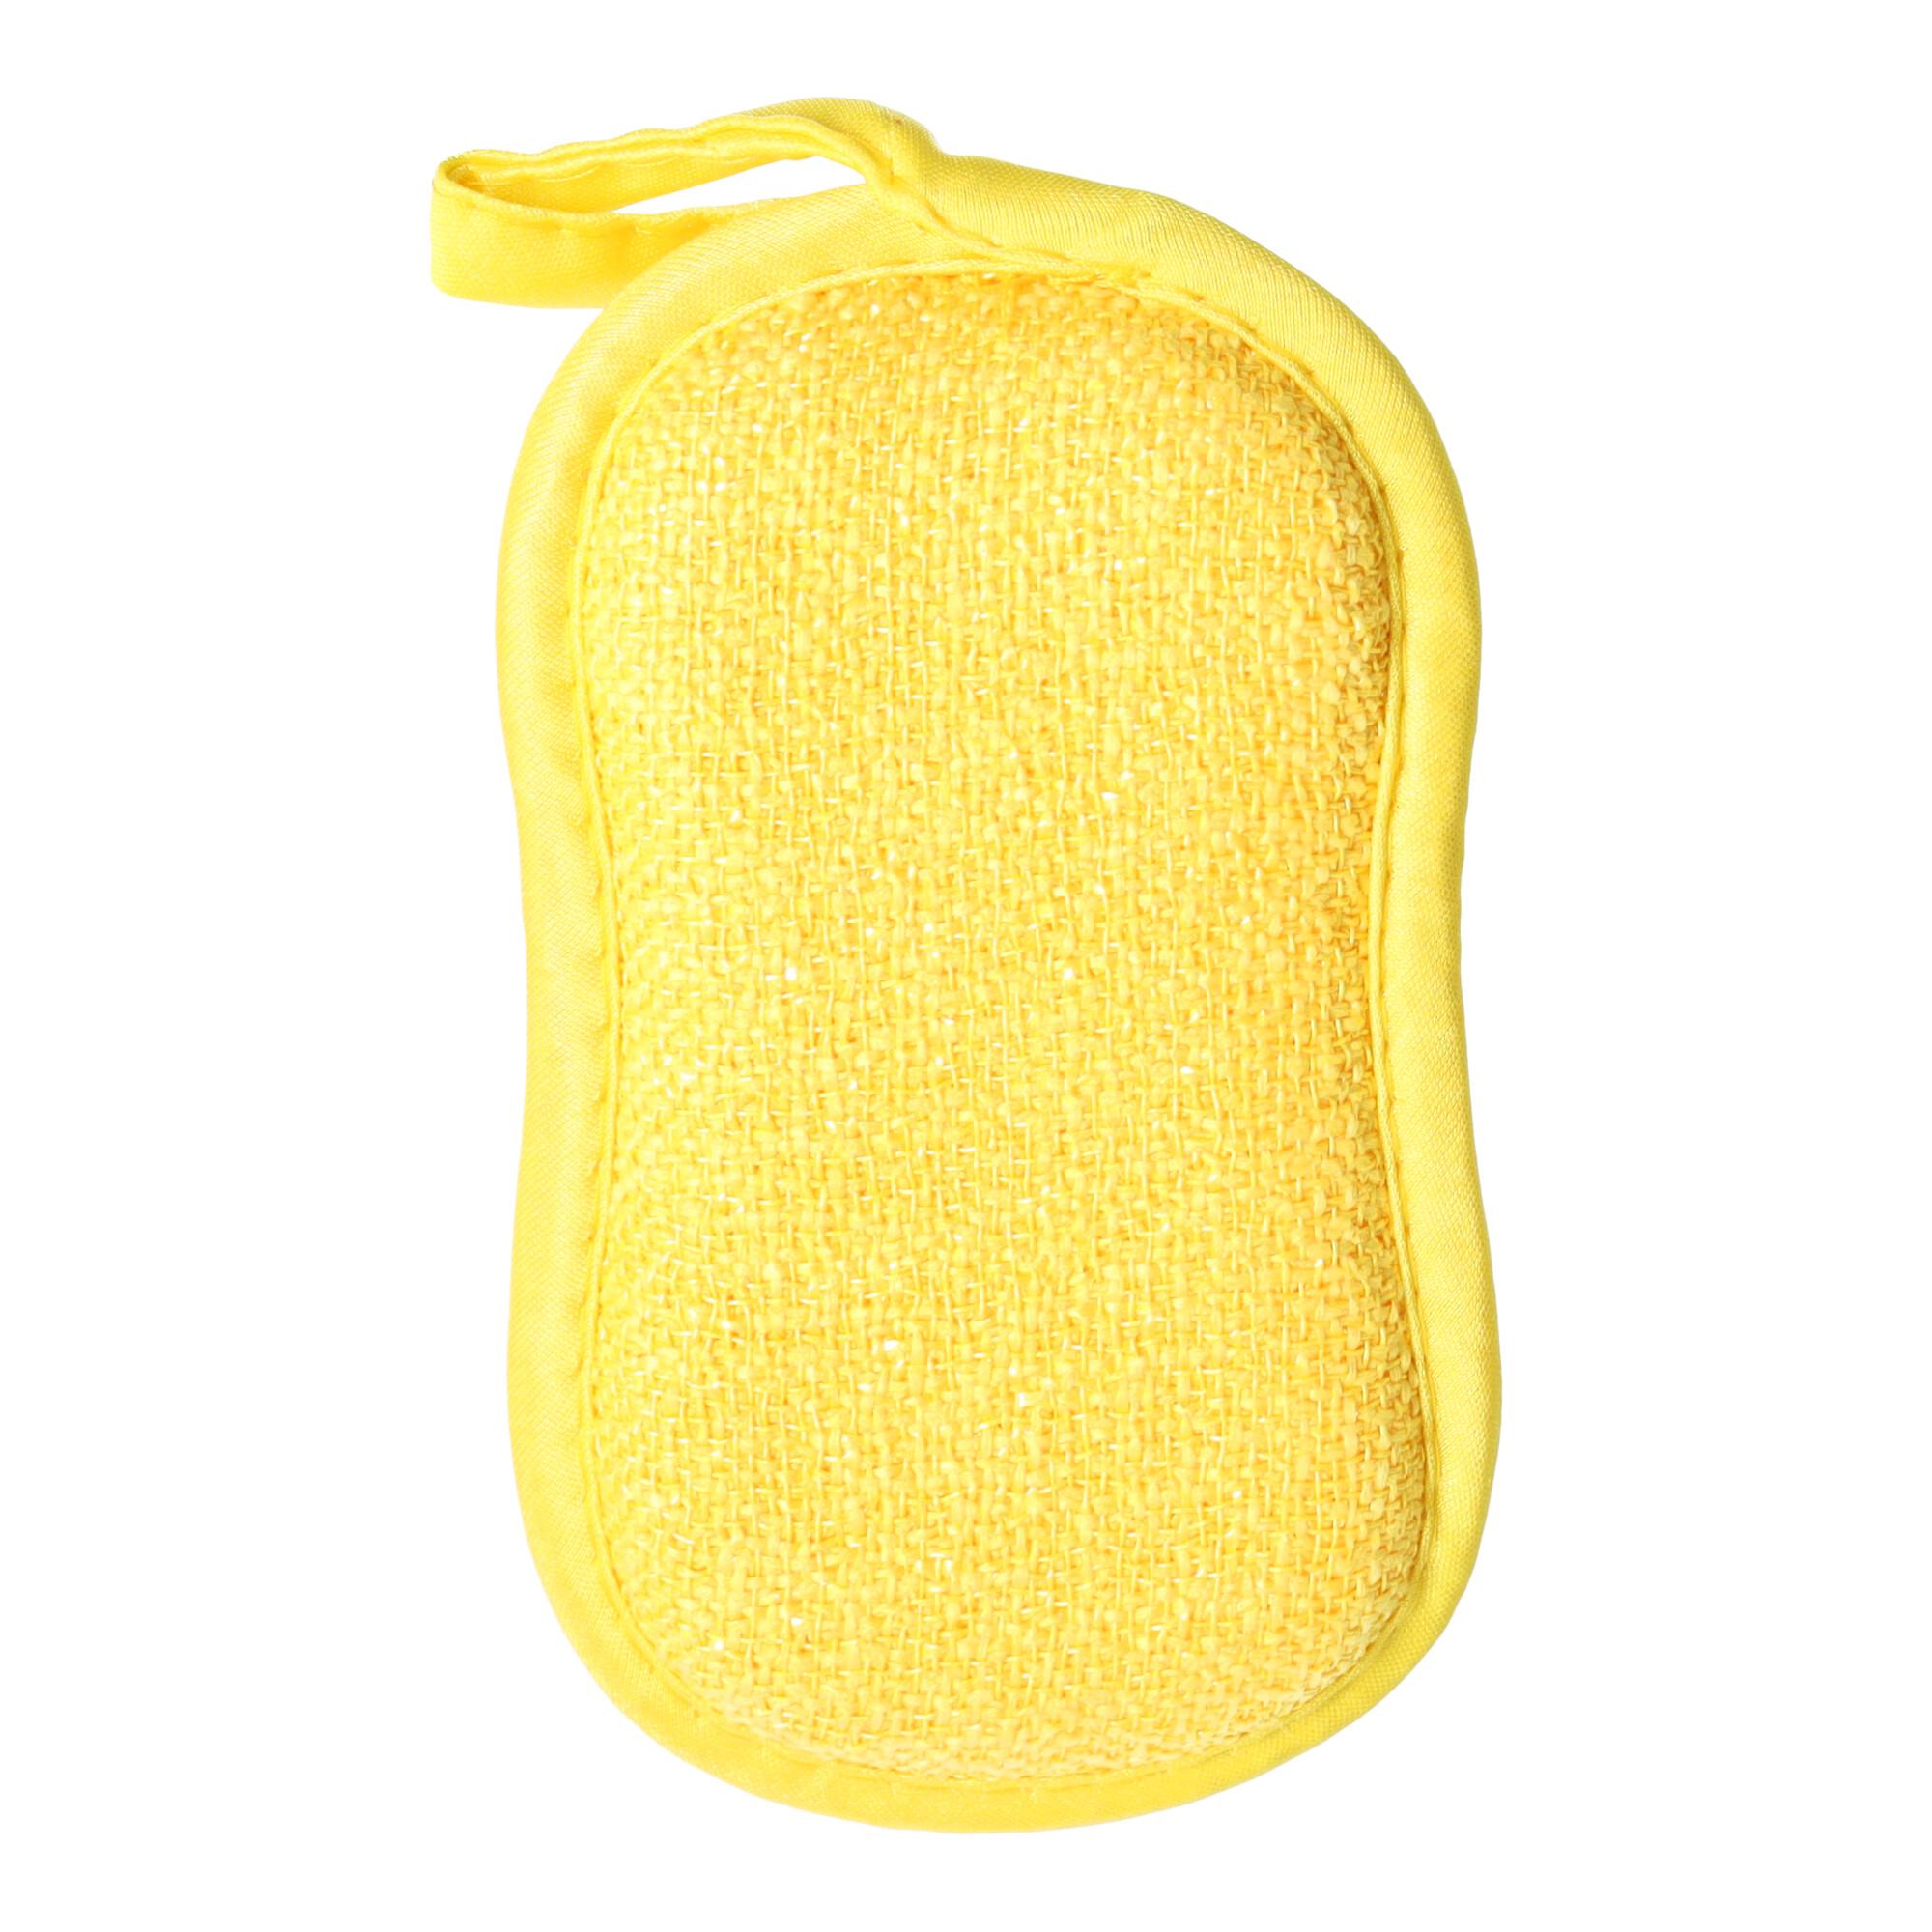 Kitchen cleaning sponge - yellow